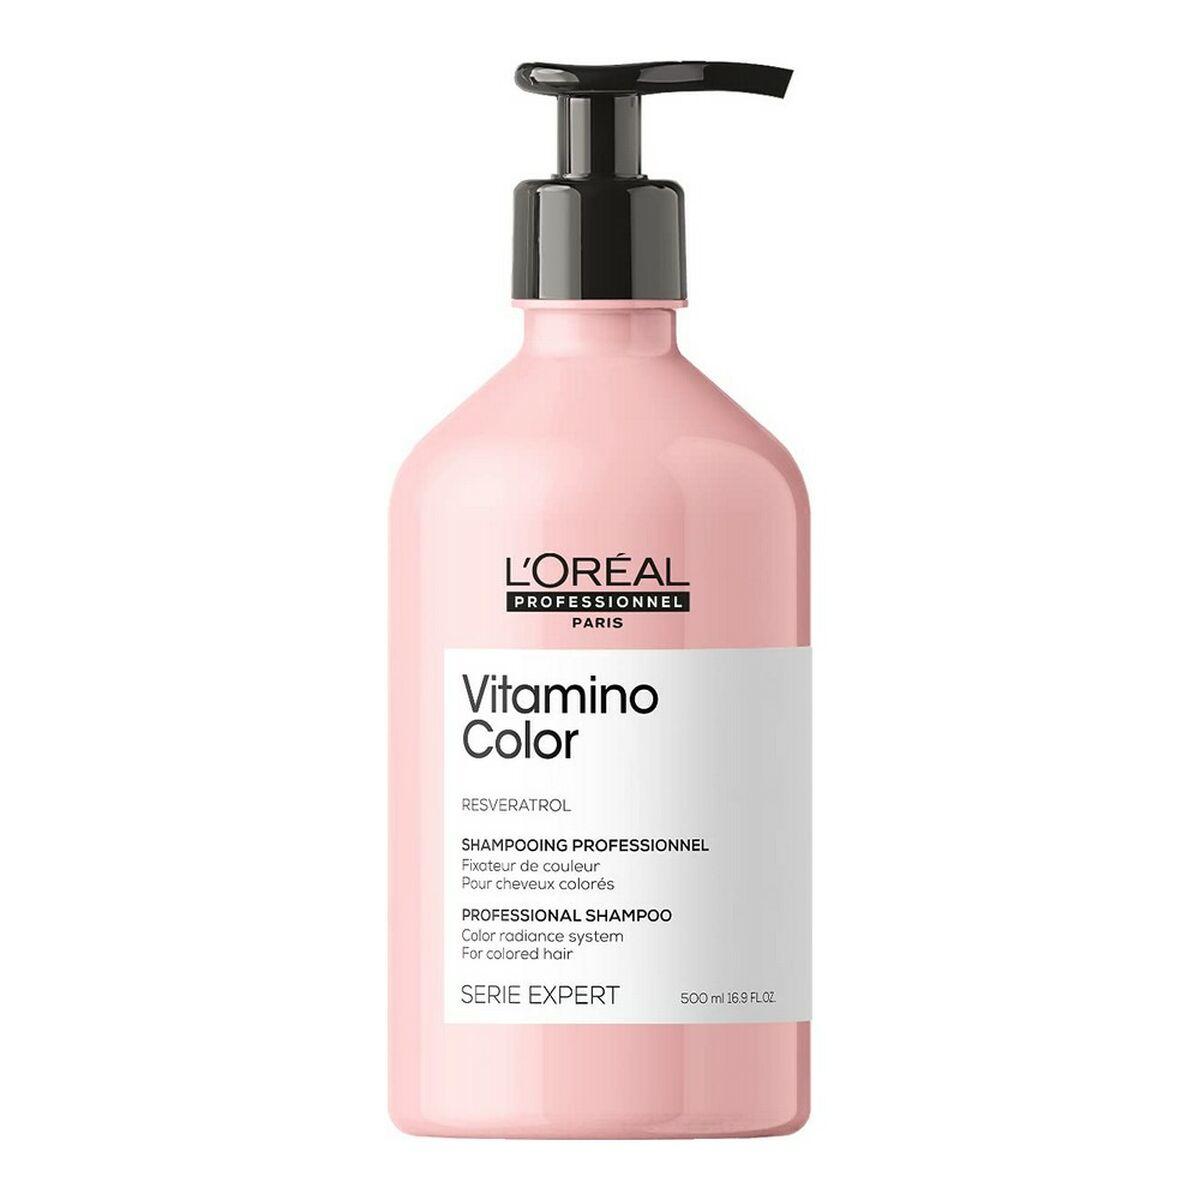 Se Shampoo Expert Vitamino Color L'Oreal Professionnel Paris (500 ml) hos Boligcenter.dk